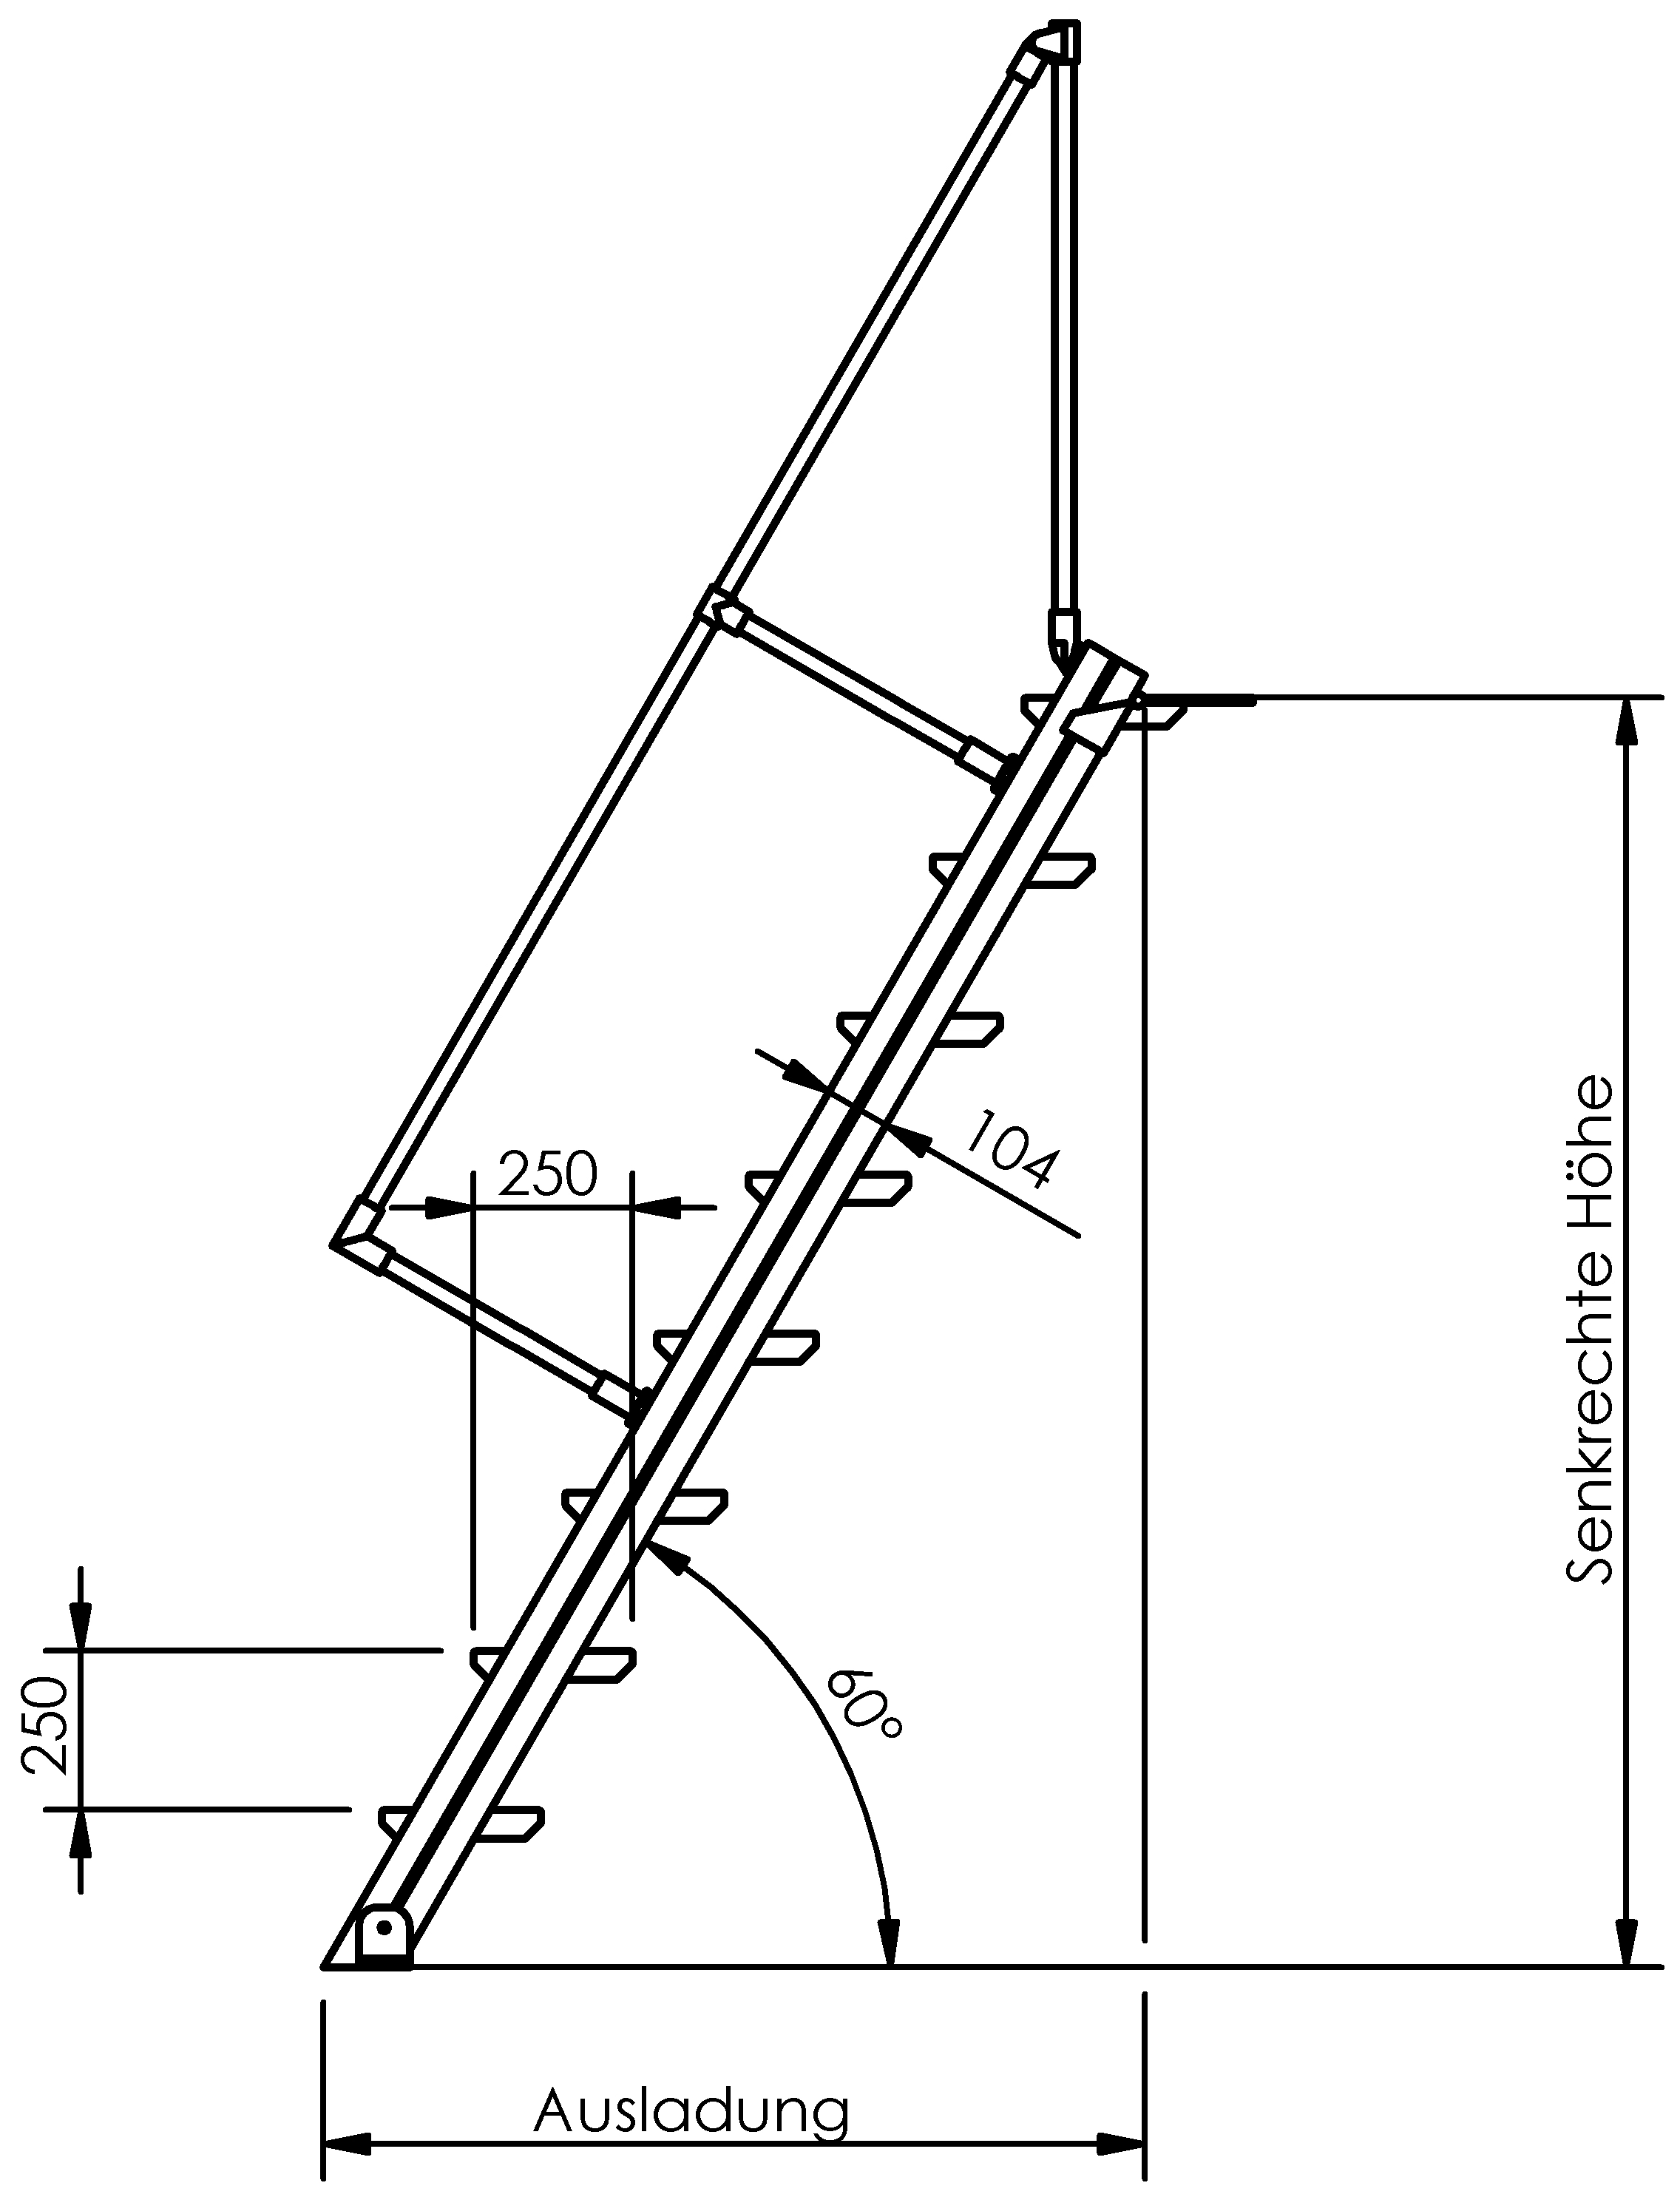 Selbstbautreppen, LW 1000mm, Stufen aus Alu, Neigung 45°